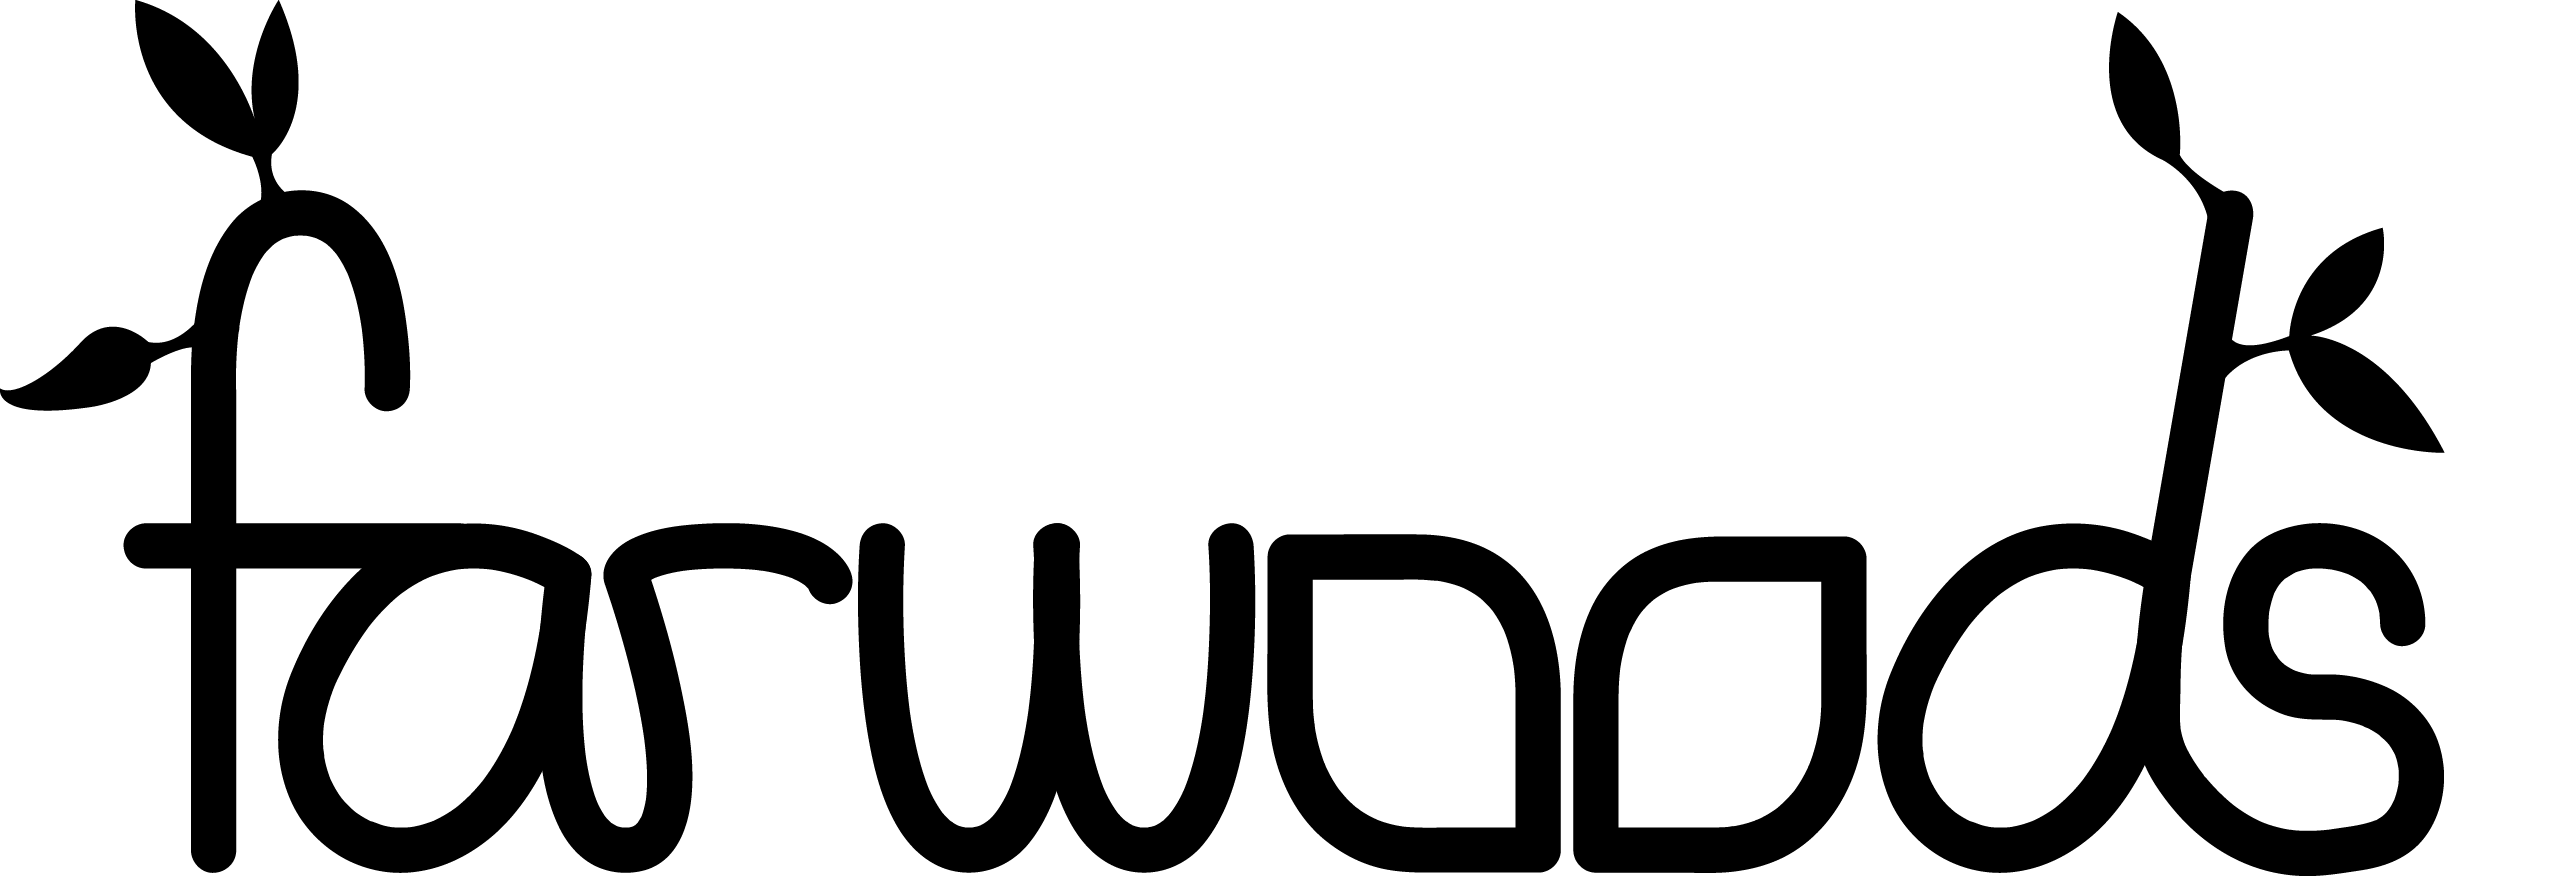 Farwoods logo